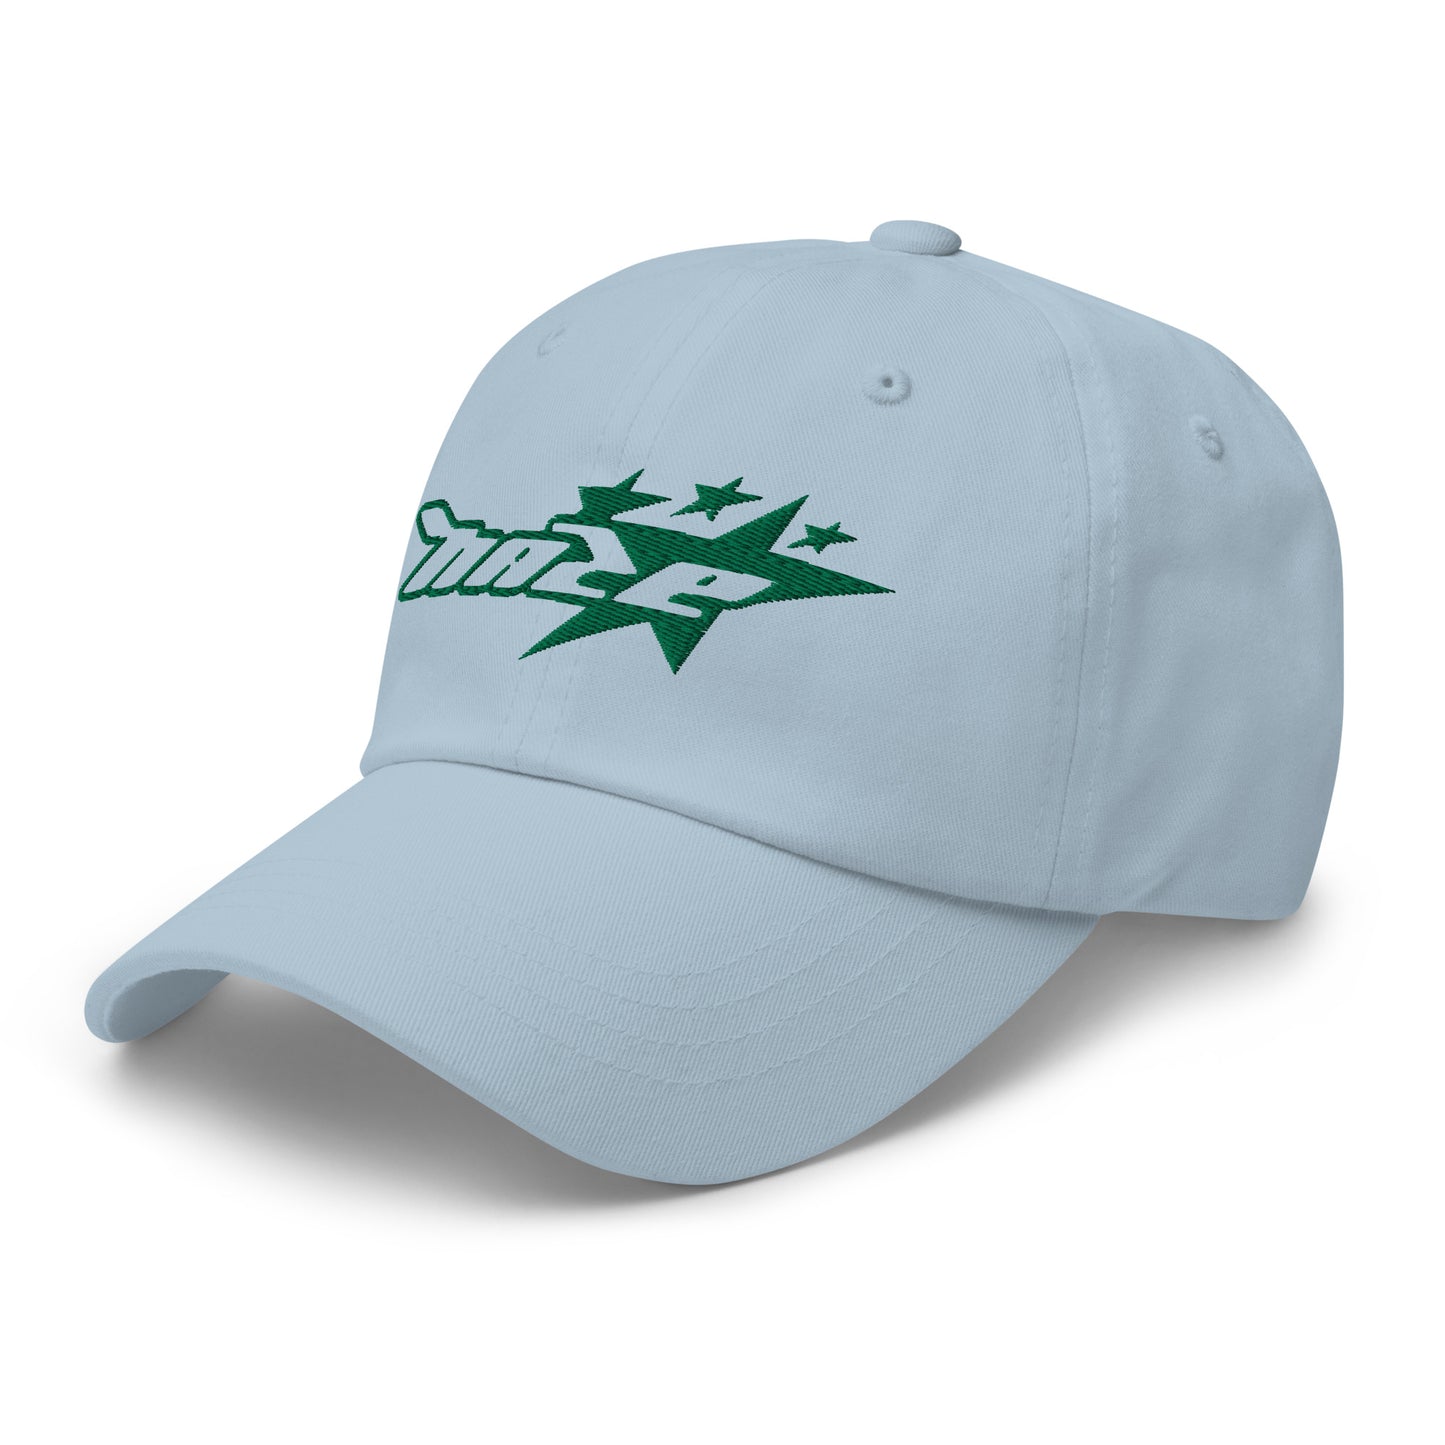 Green "Star" Hat